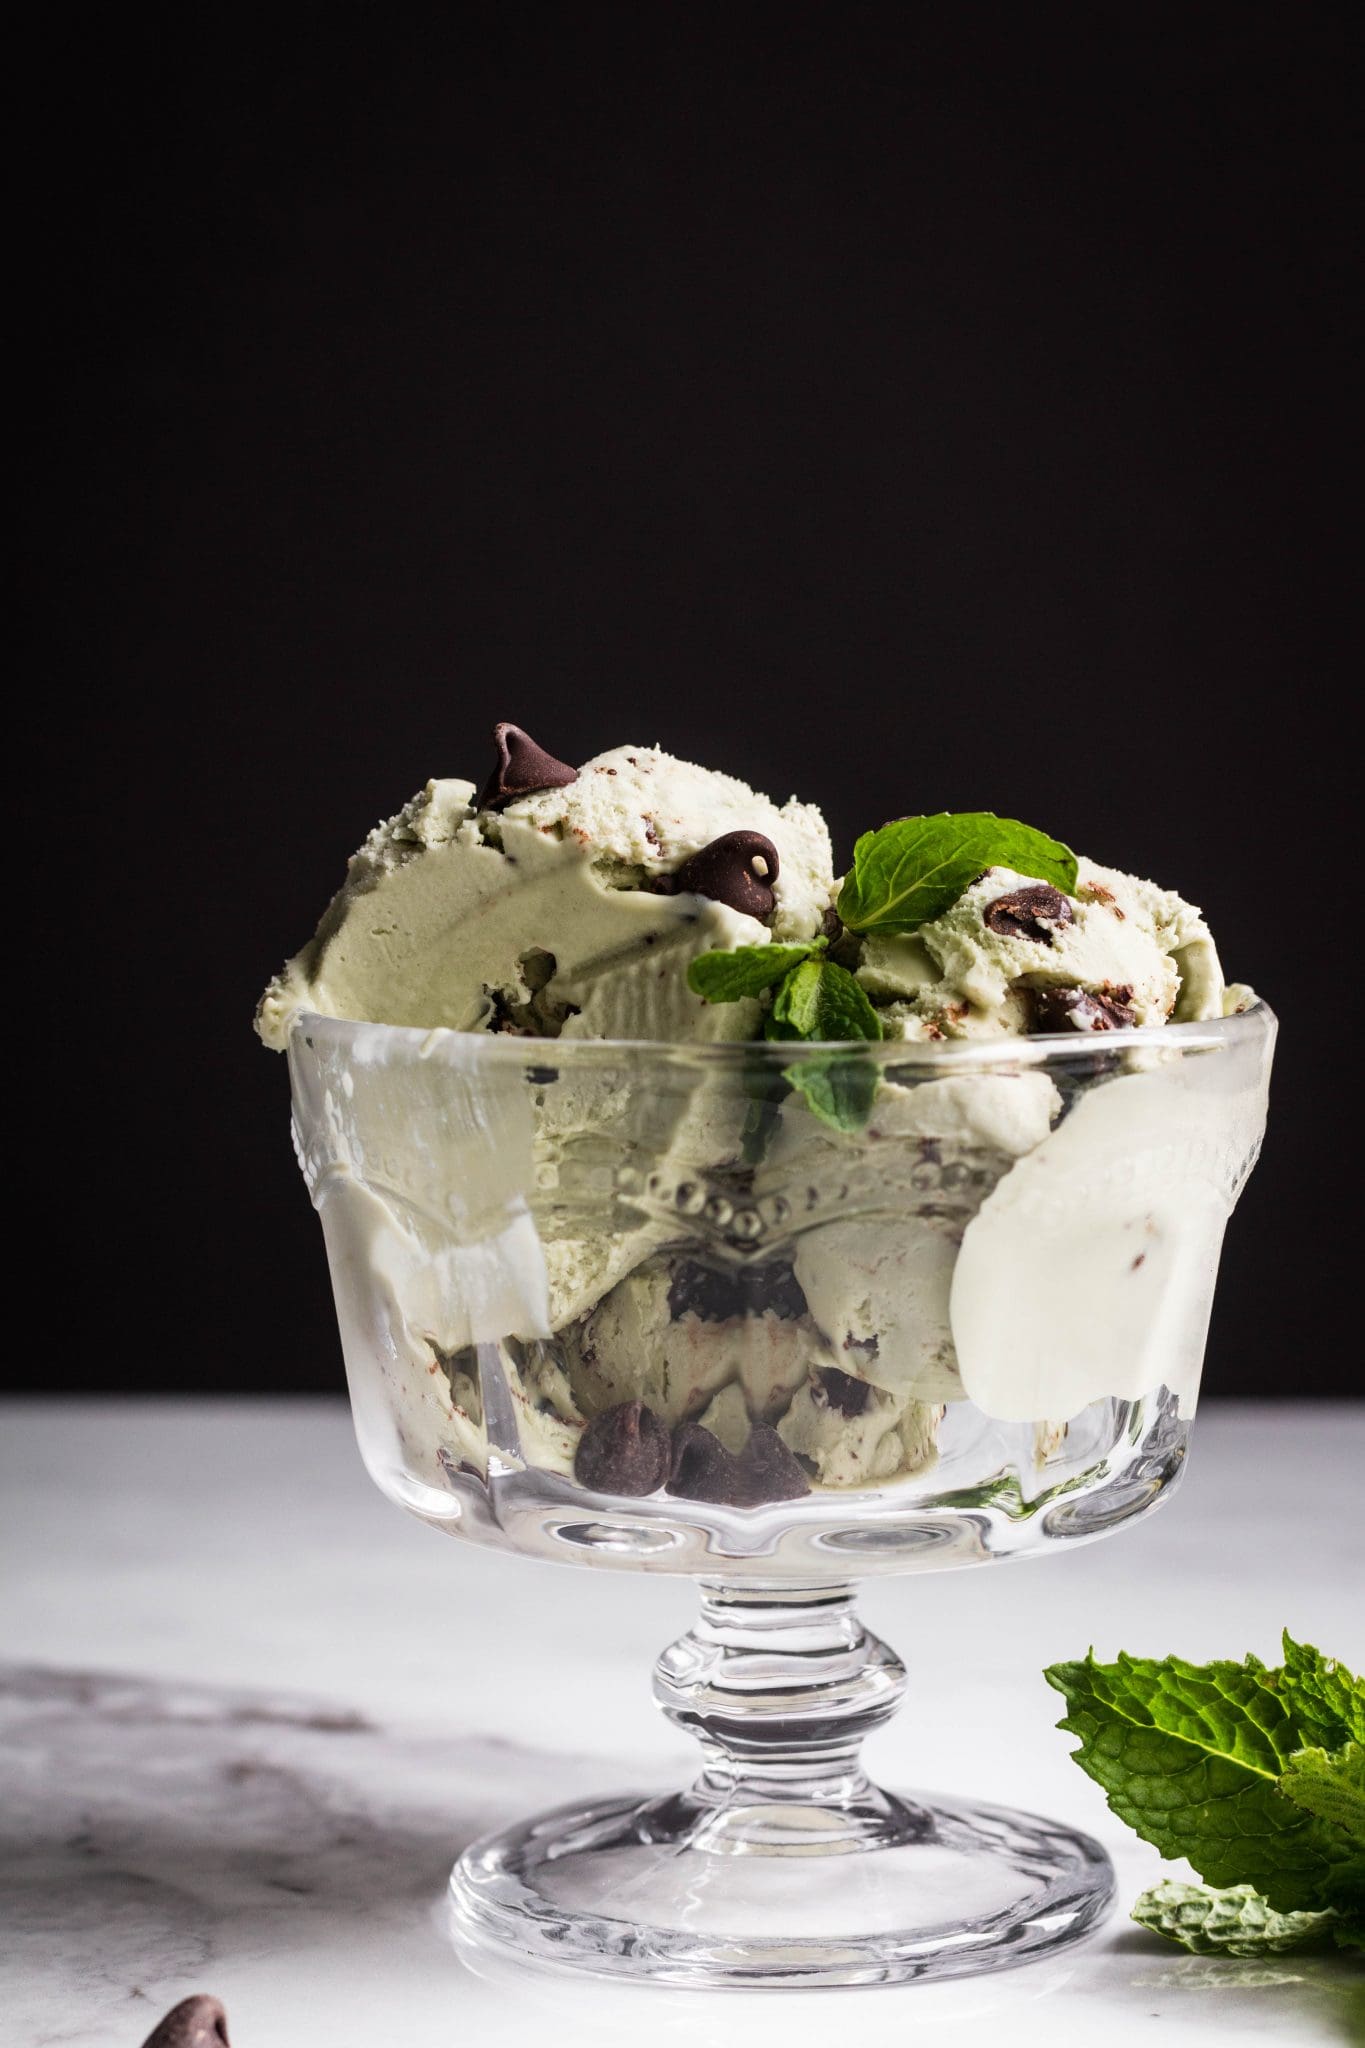 vegan matcha mint chocolate chip ice cream in a glass bowl